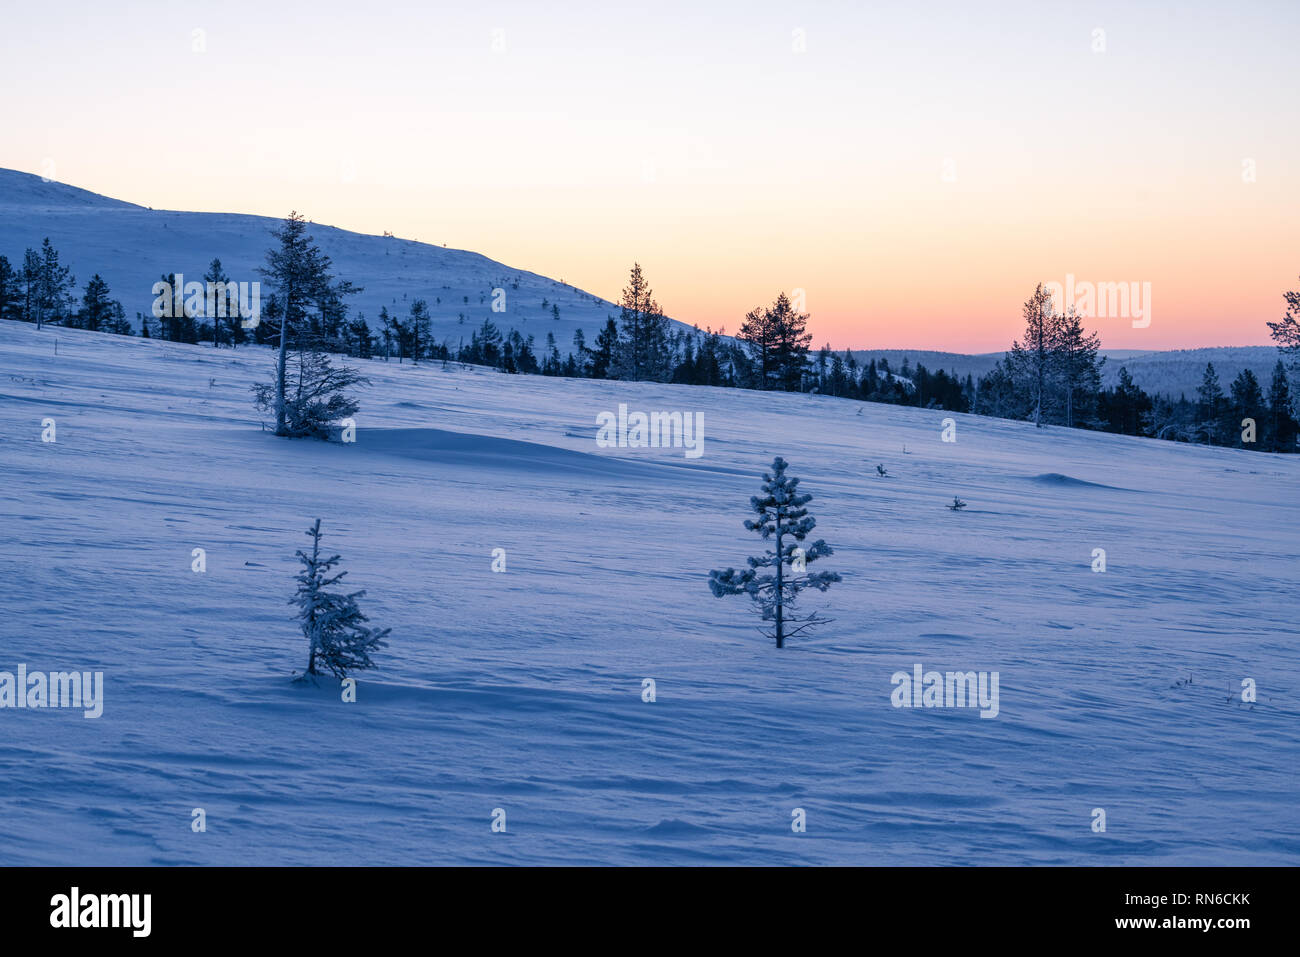 Landscape view in Palas-Yllästunturi National Park at winter in Finland Stock Photo